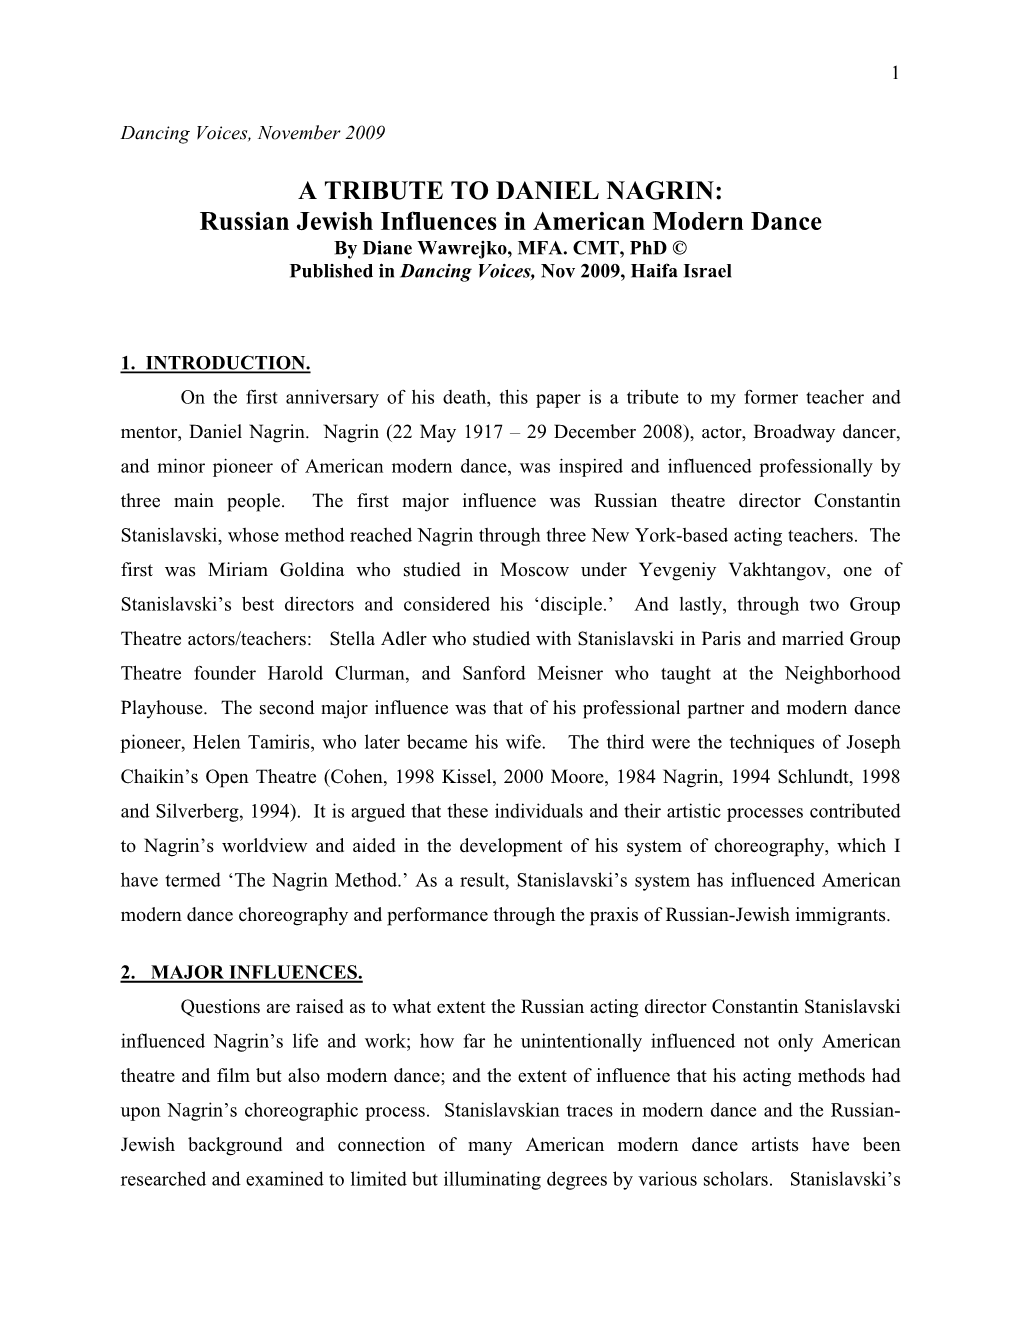 A TRIBUTE to DANIEL NAGRIN: Russian Jewish Influences in American Modern Dance by Diane Wawrejko, MFA